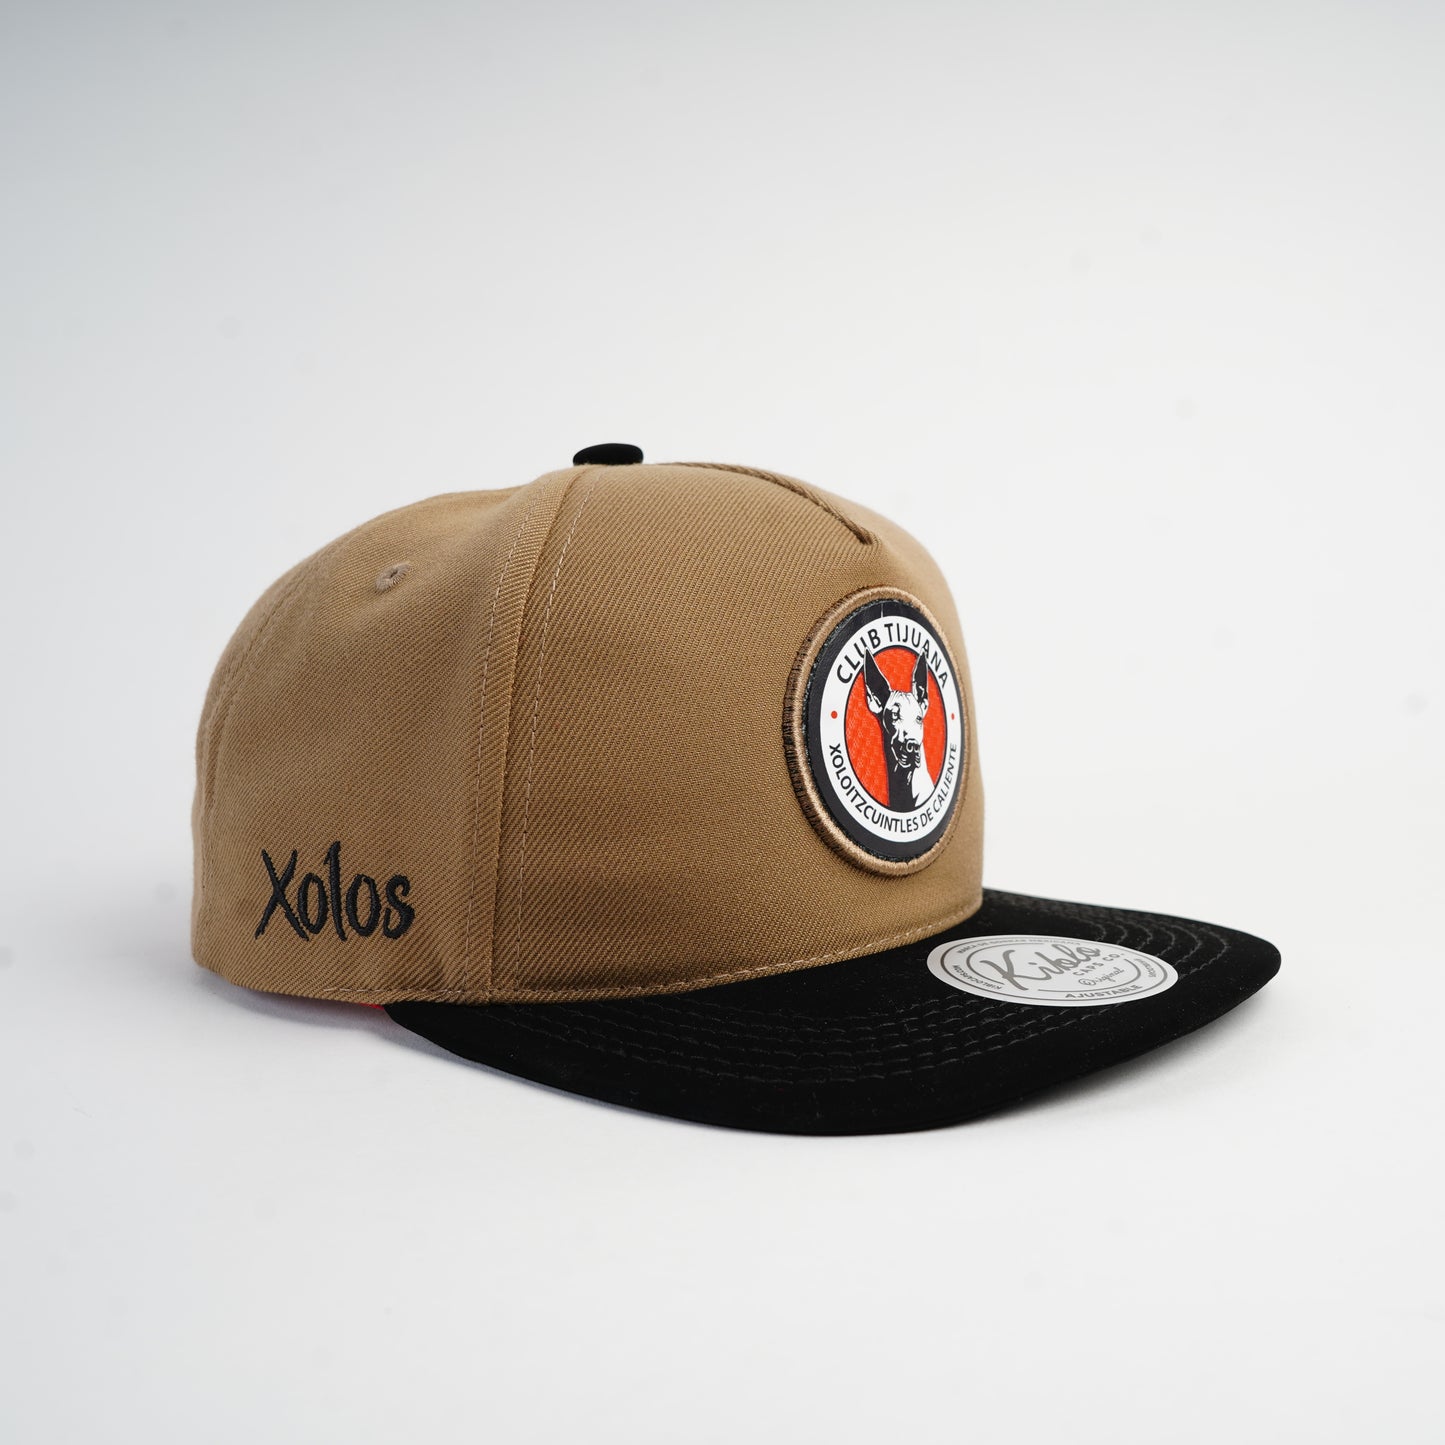 Xolos - Brown/Black Cap